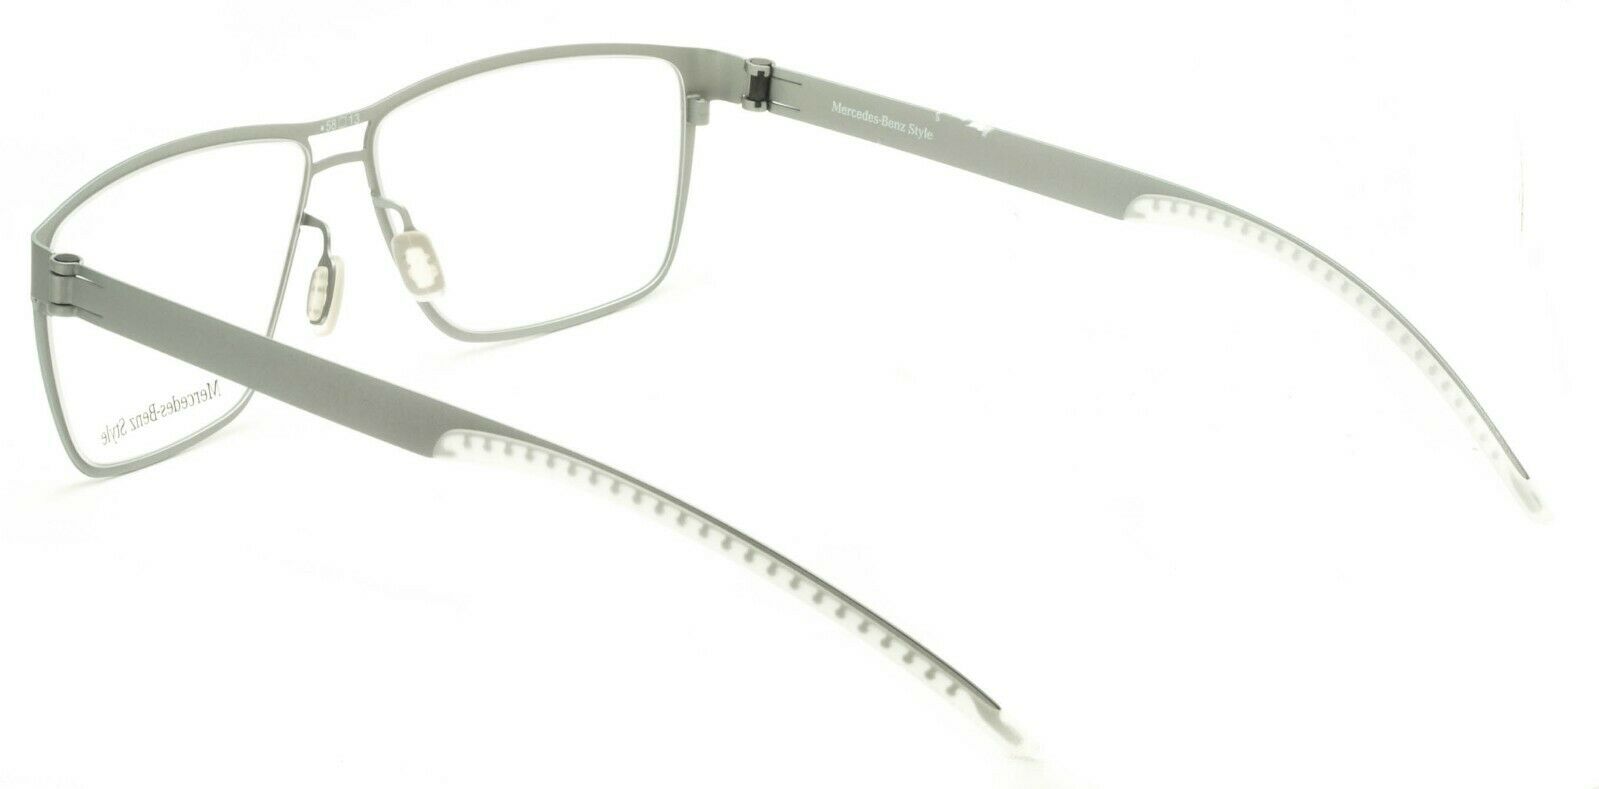 MERCEDES BENZ STYLE M 2058 A 58mm Eyewear FRAMES RX Optical Eyeglasses Glasses